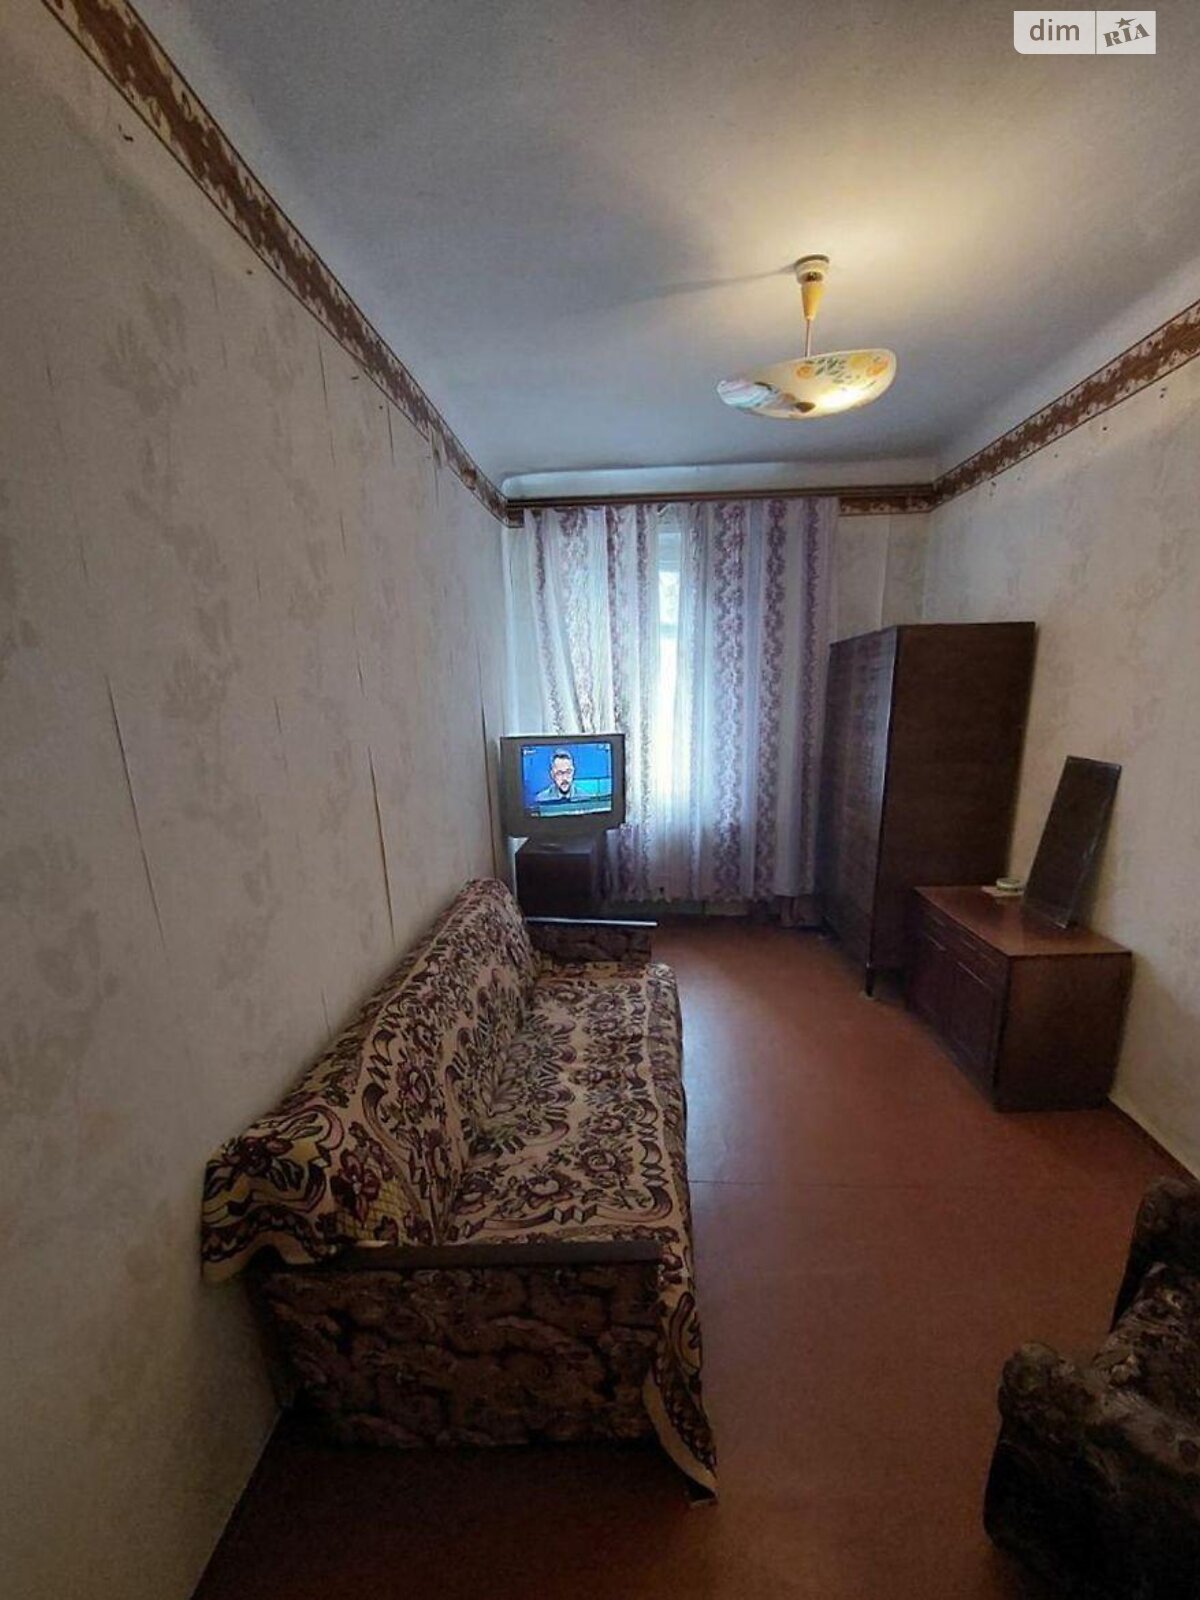 Продажа двухкомнатной квартиры в Харькове, на ул. Михайлика 15, район Сабурова Дача фото 1